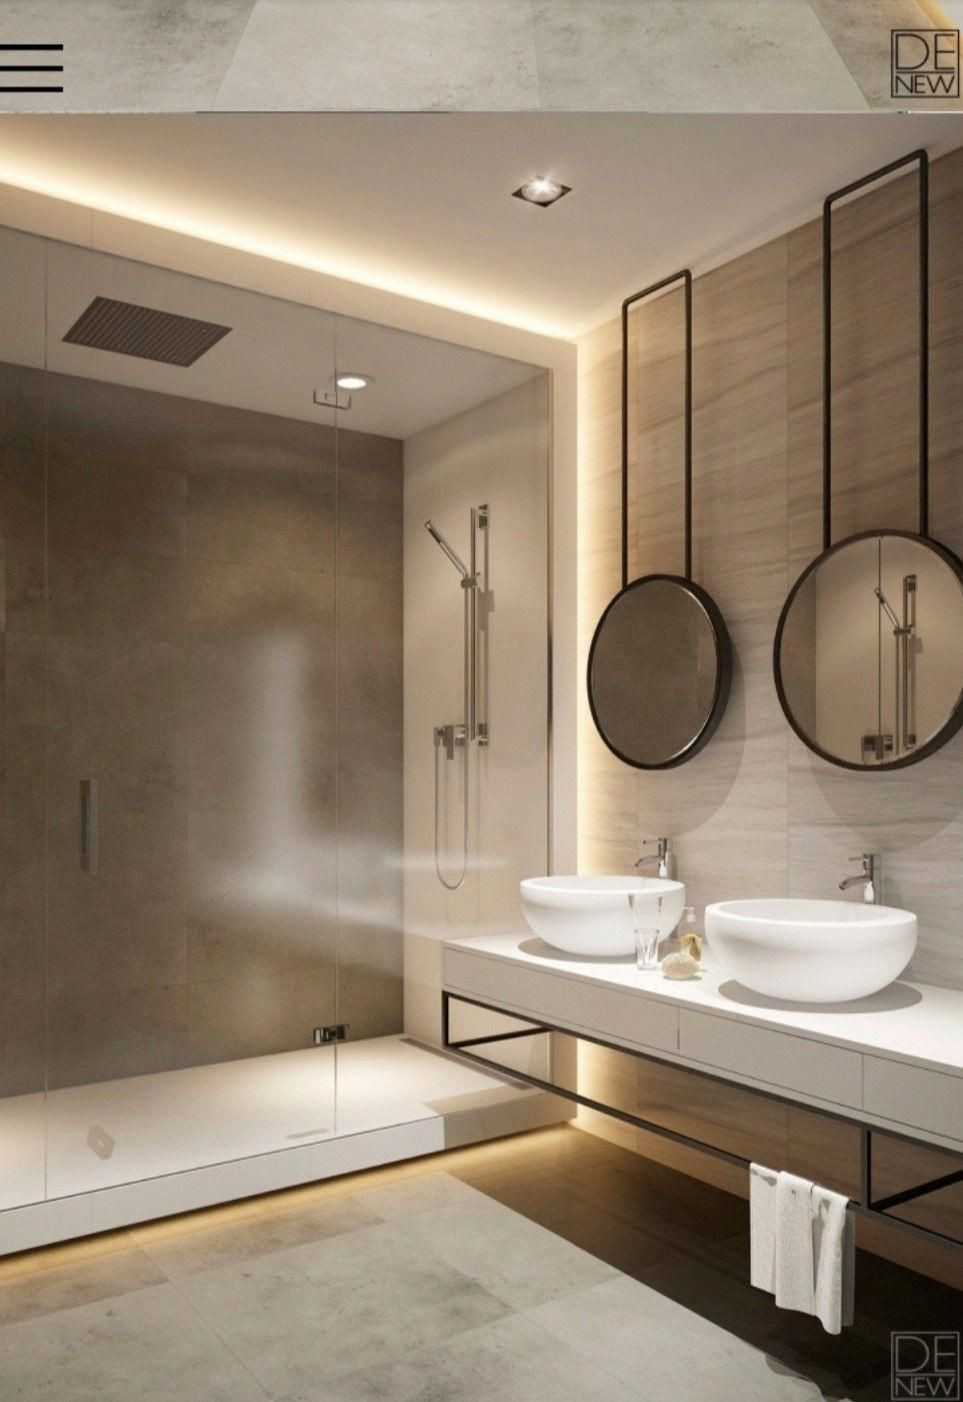 25 Marvelous Online Bathroom Design tool - Online Bathroom Design Tool Inspirational Bathroom Design Tool Free Best Bathroom Design 2020 Of Online Bathroom Design Tool